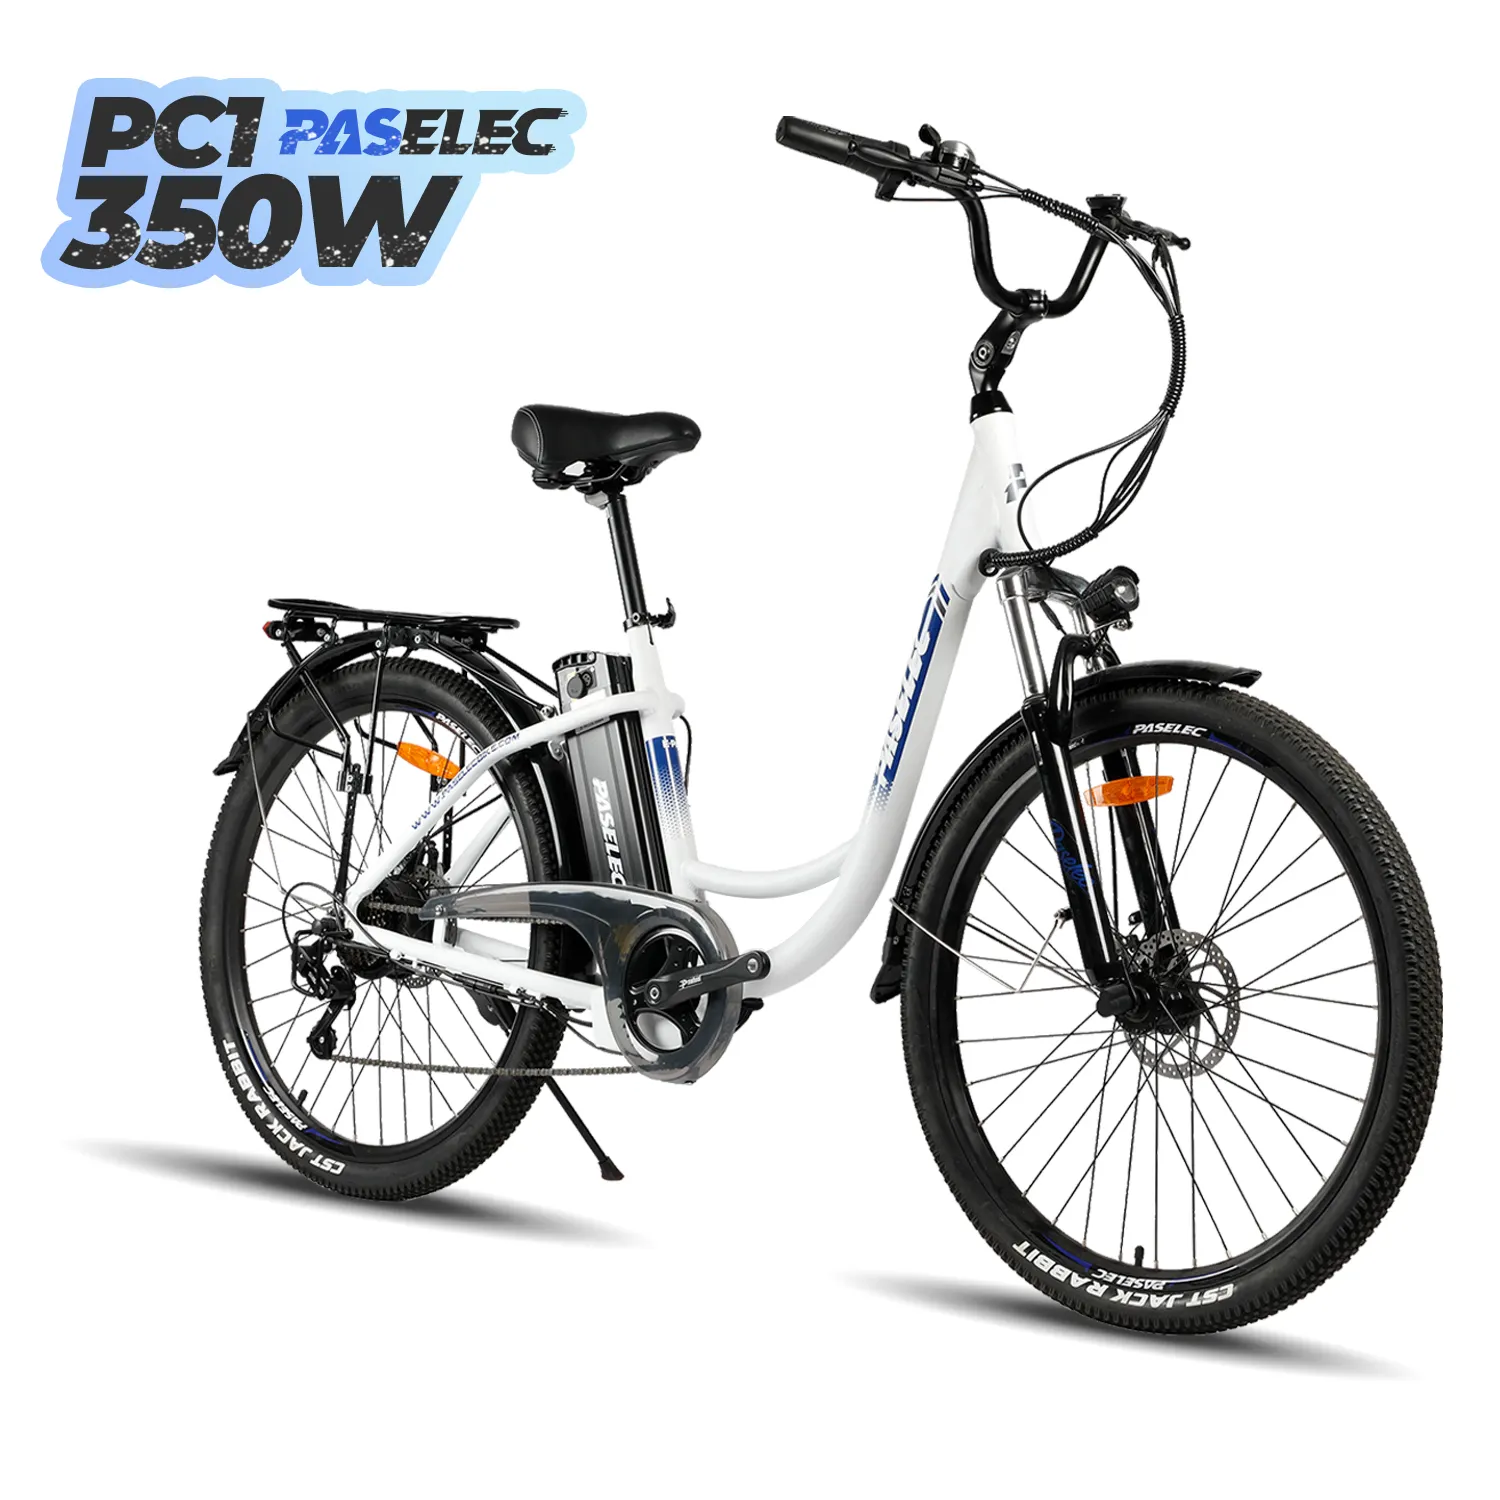 Hot sale e bike city bike electric bicycle 350w ebike pedelec bicicleta electrica moped functionality mode e-bike